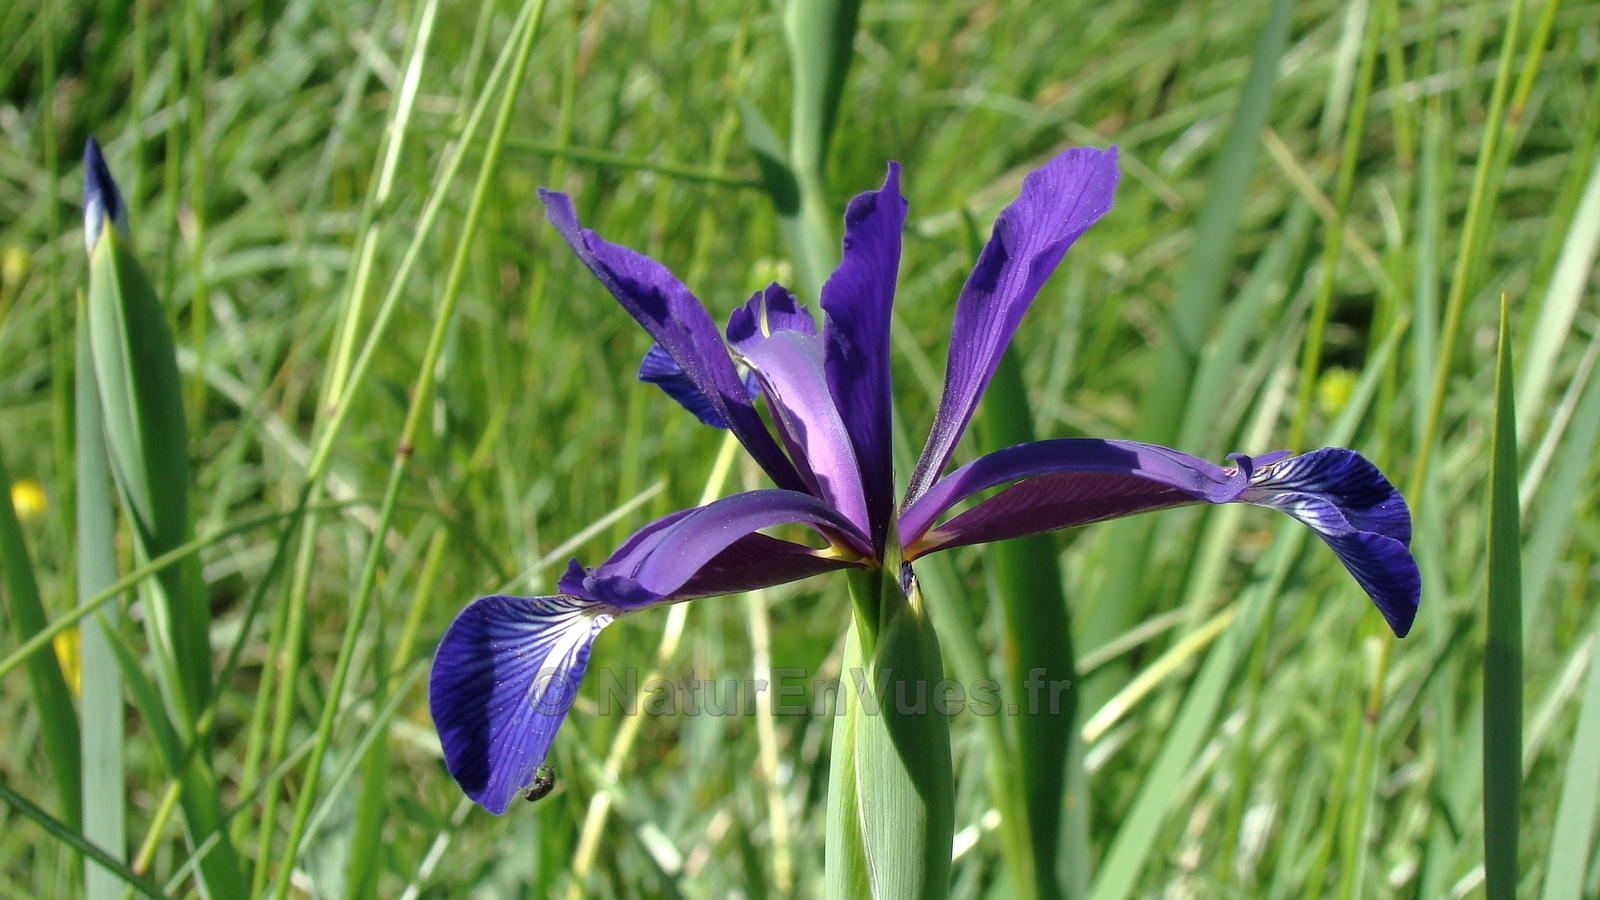 Iris spuria (Nîmes - 30)